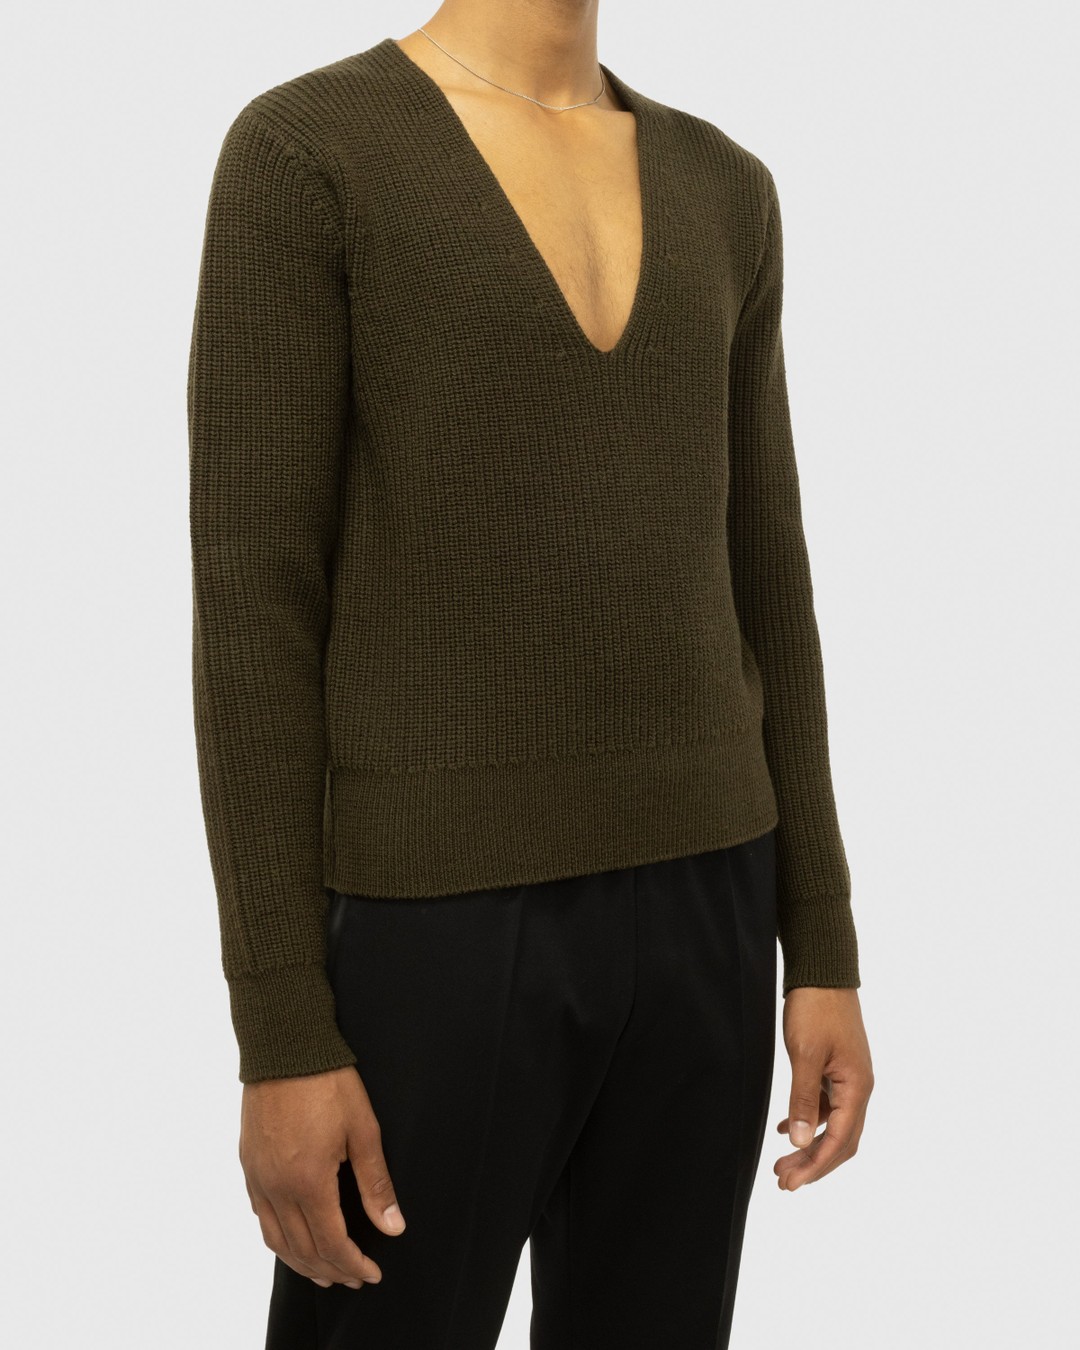 Dries van Noten – Newton Merino Sweater Green - Knitwear - Green - Image 2